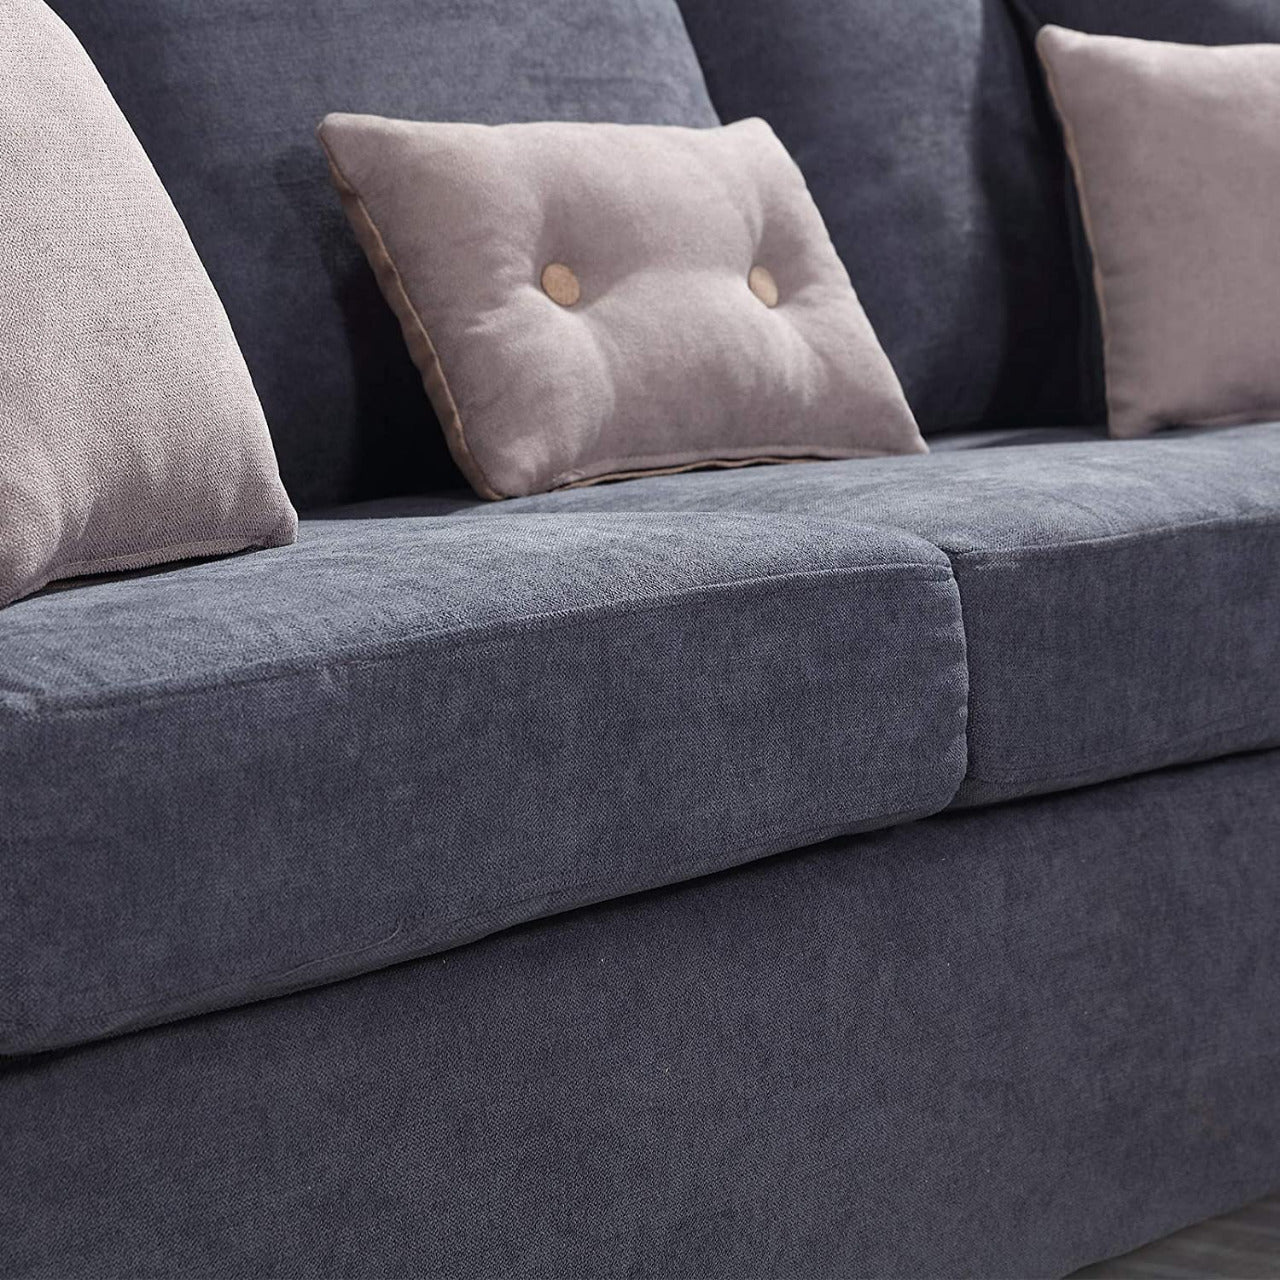 L Shape Sofa Set: Dark Grey Fabric Convertible Sofa Couch